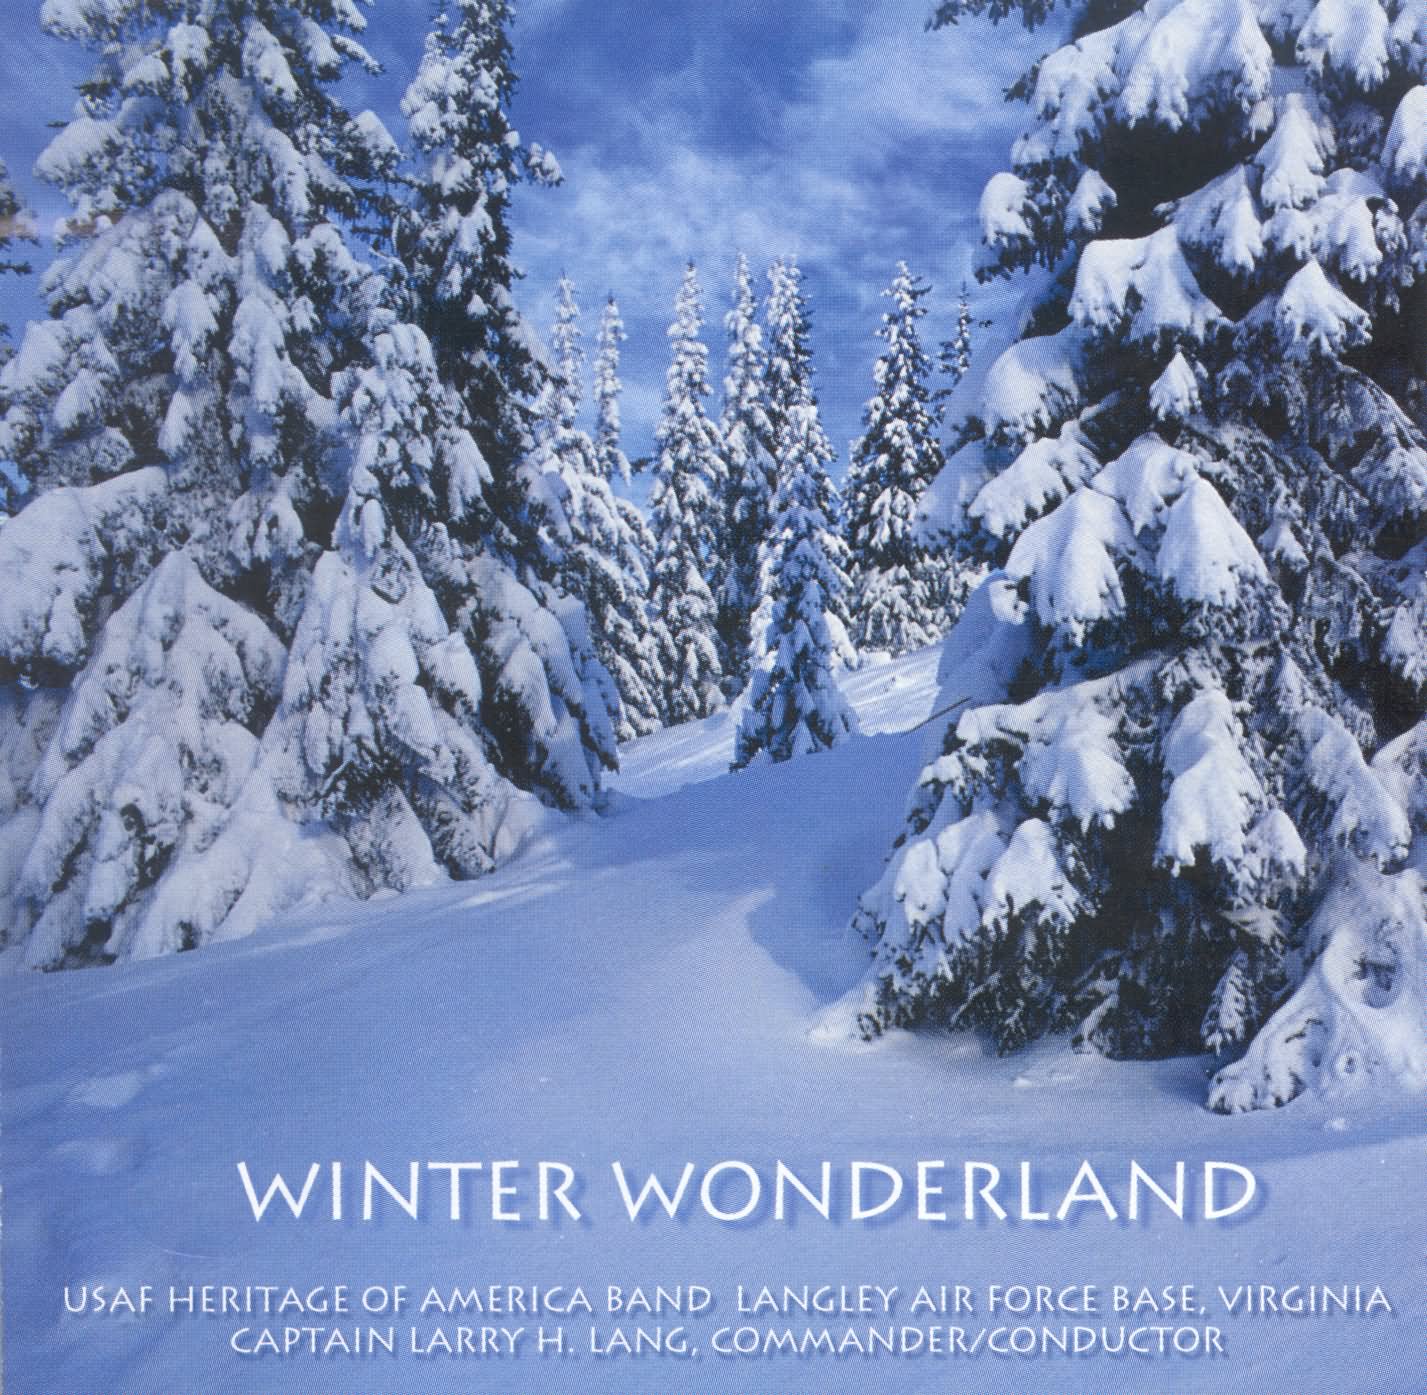 Winter Wonderland Image